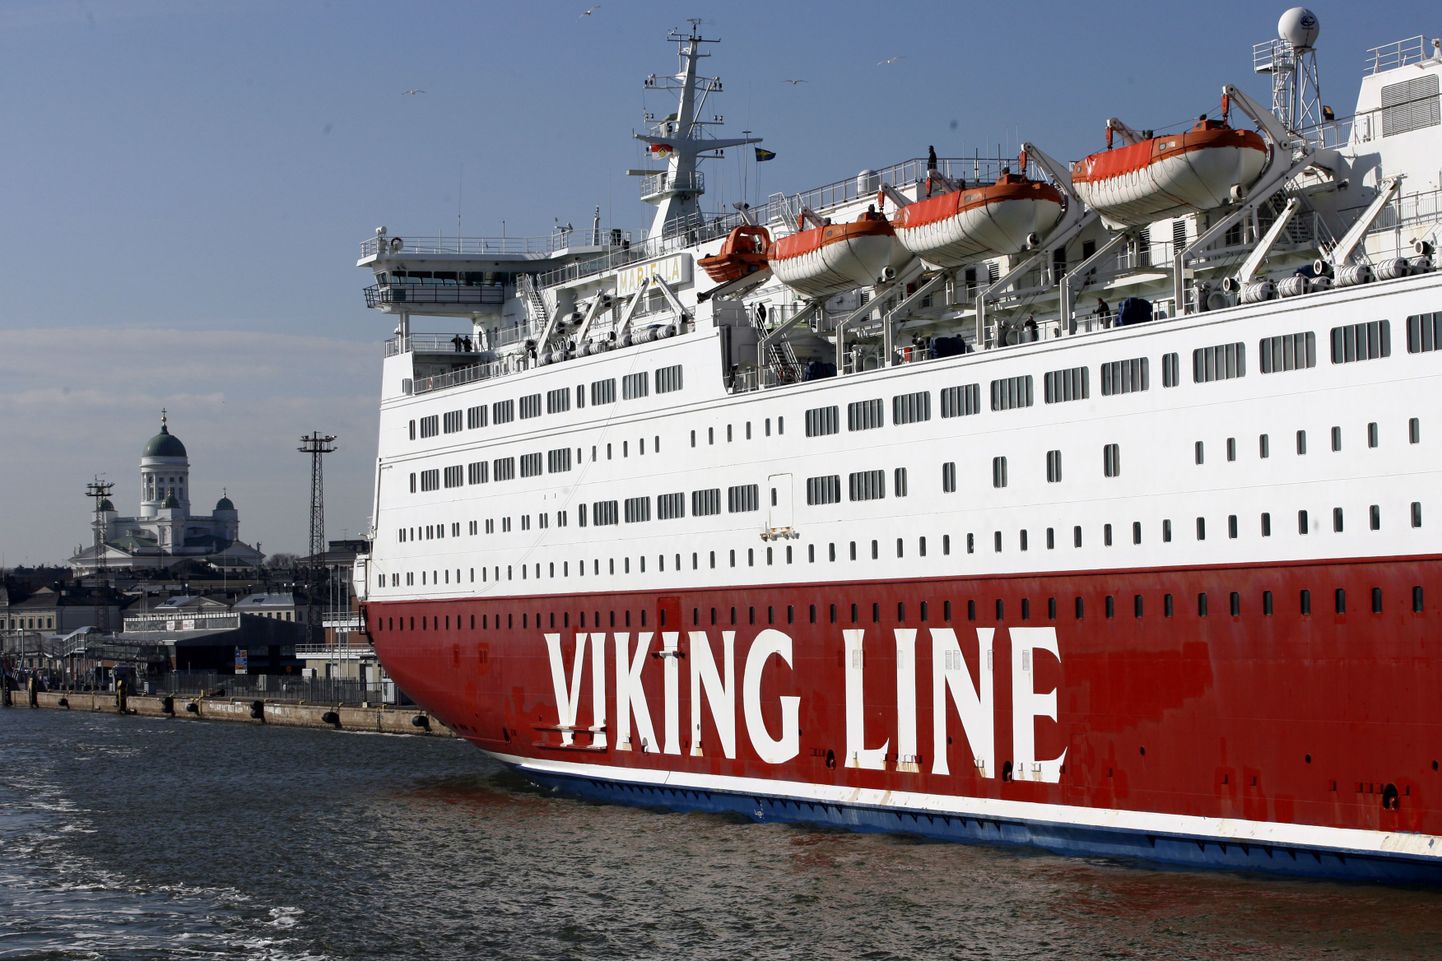 Судно Viking Line. Иллюстративное фото.